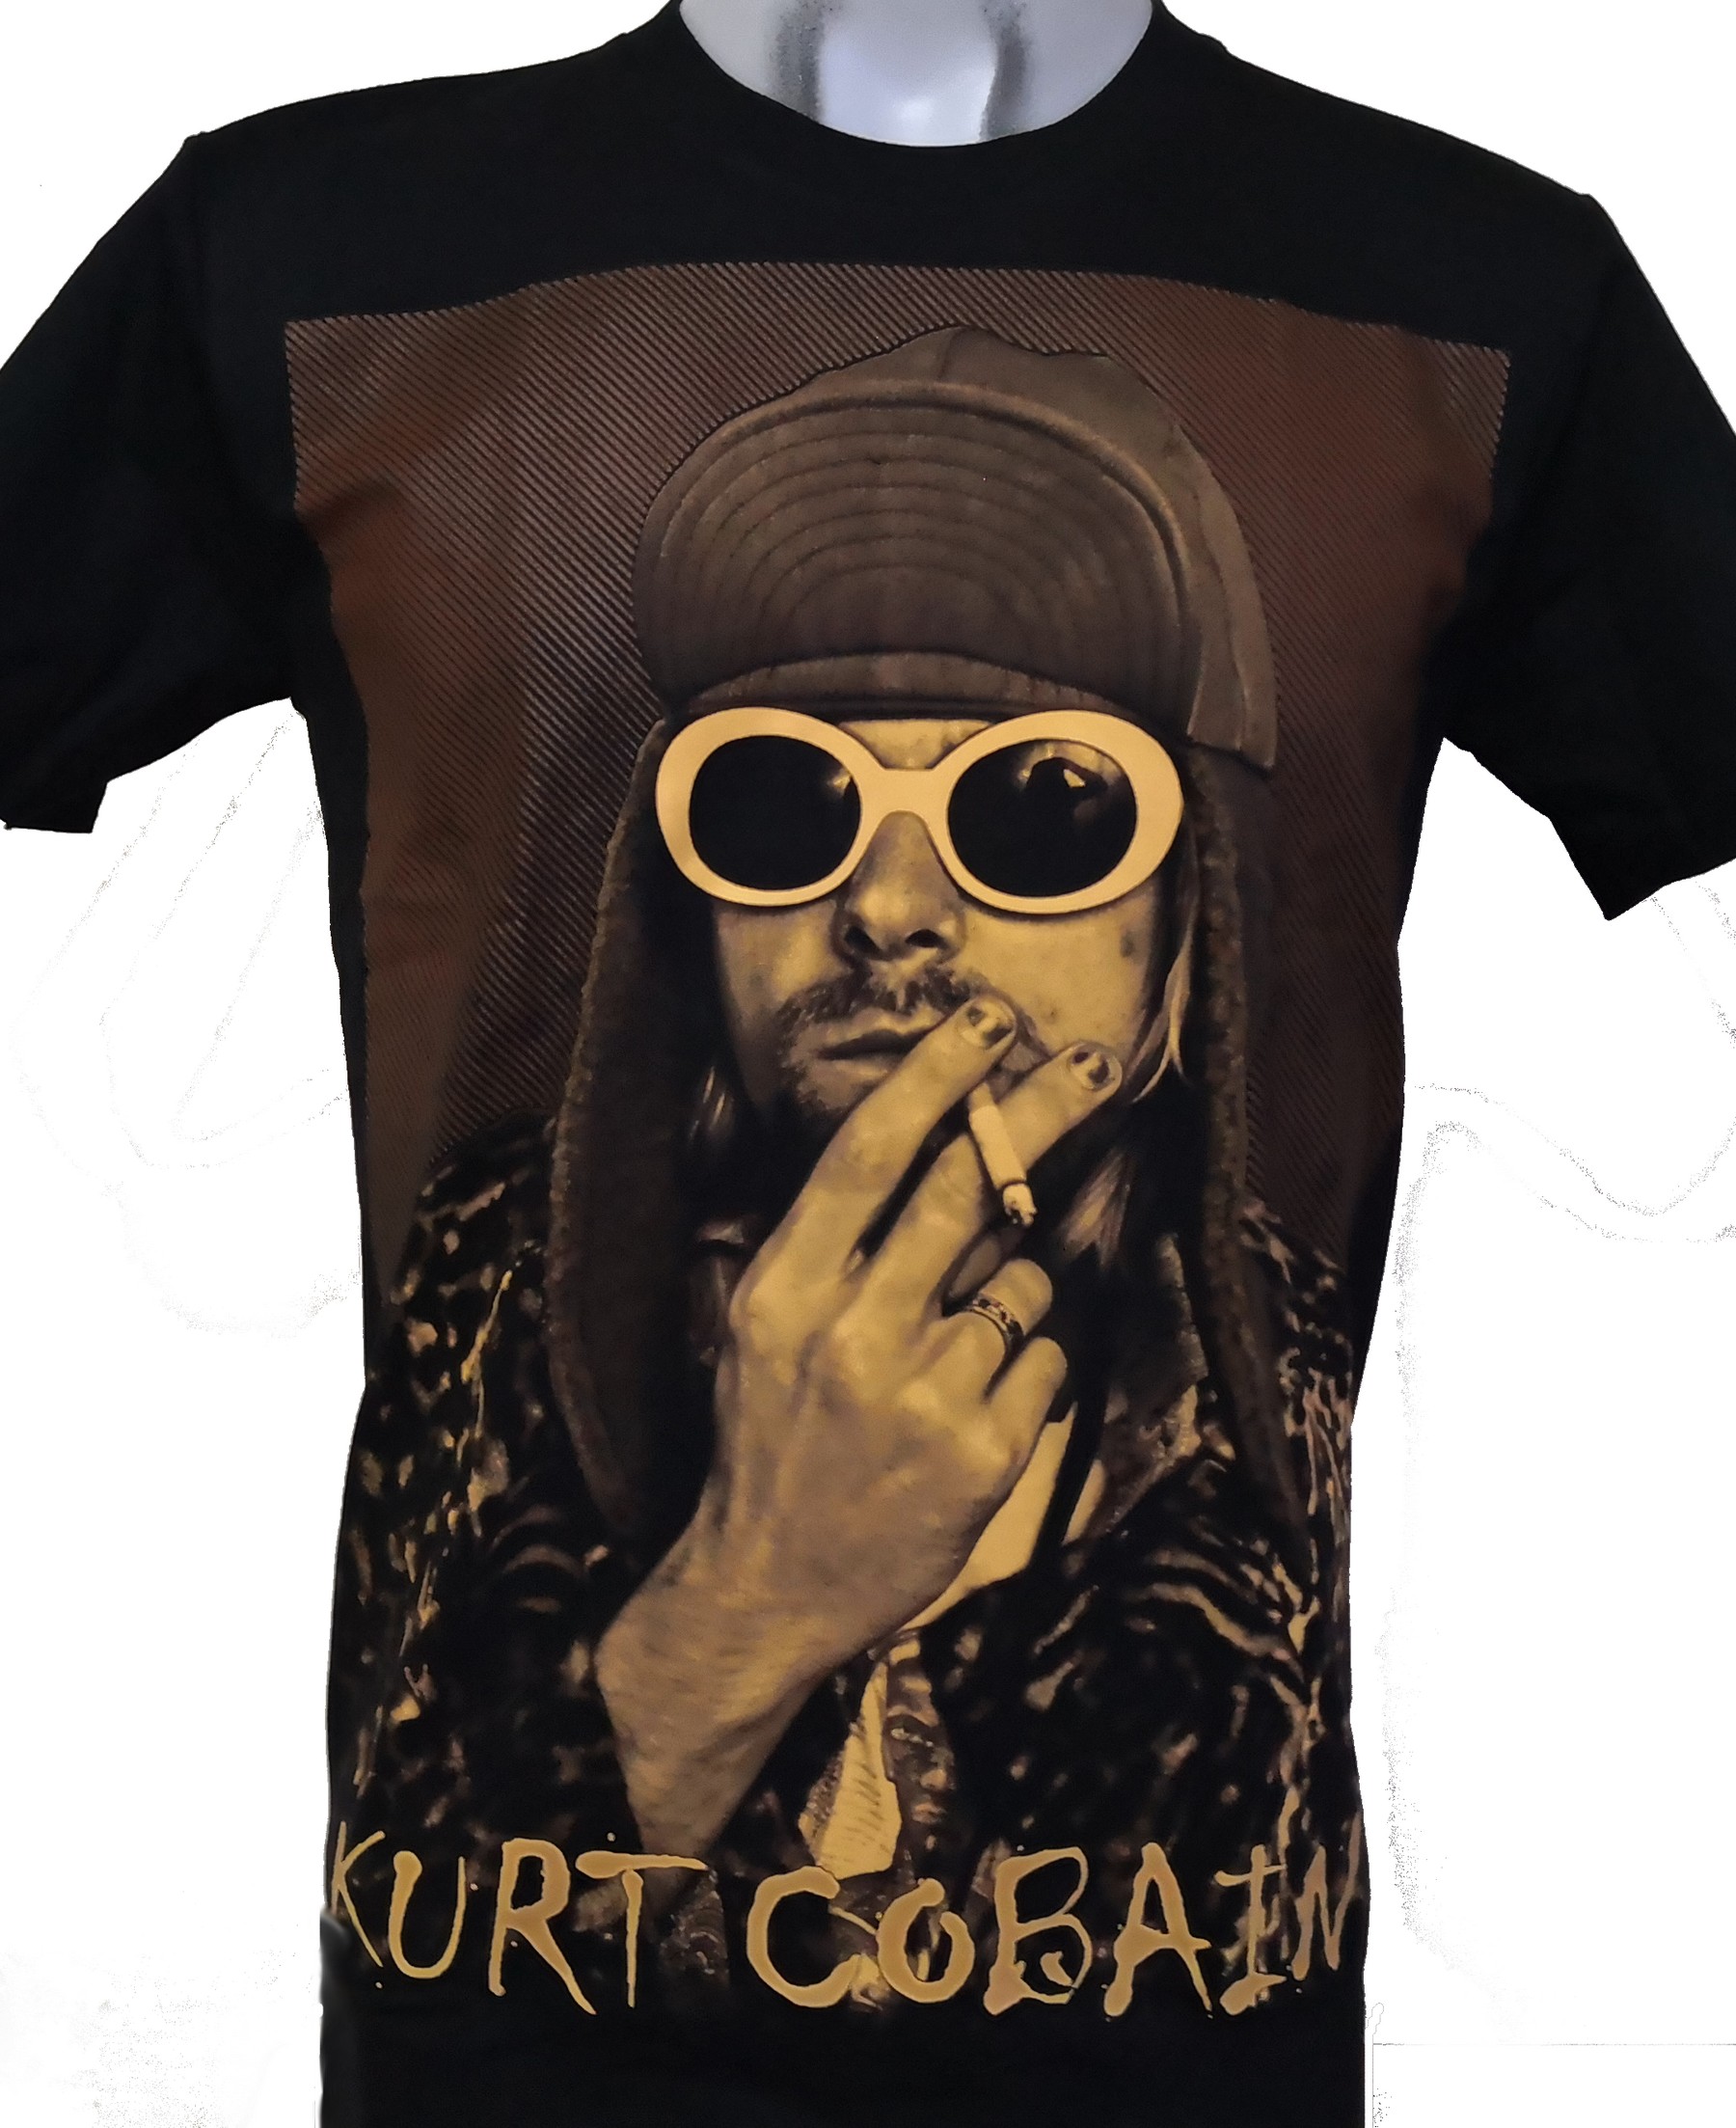 Foresee Flare Wednesday Kurt Cobain t-shirt size M – RoxxBKK